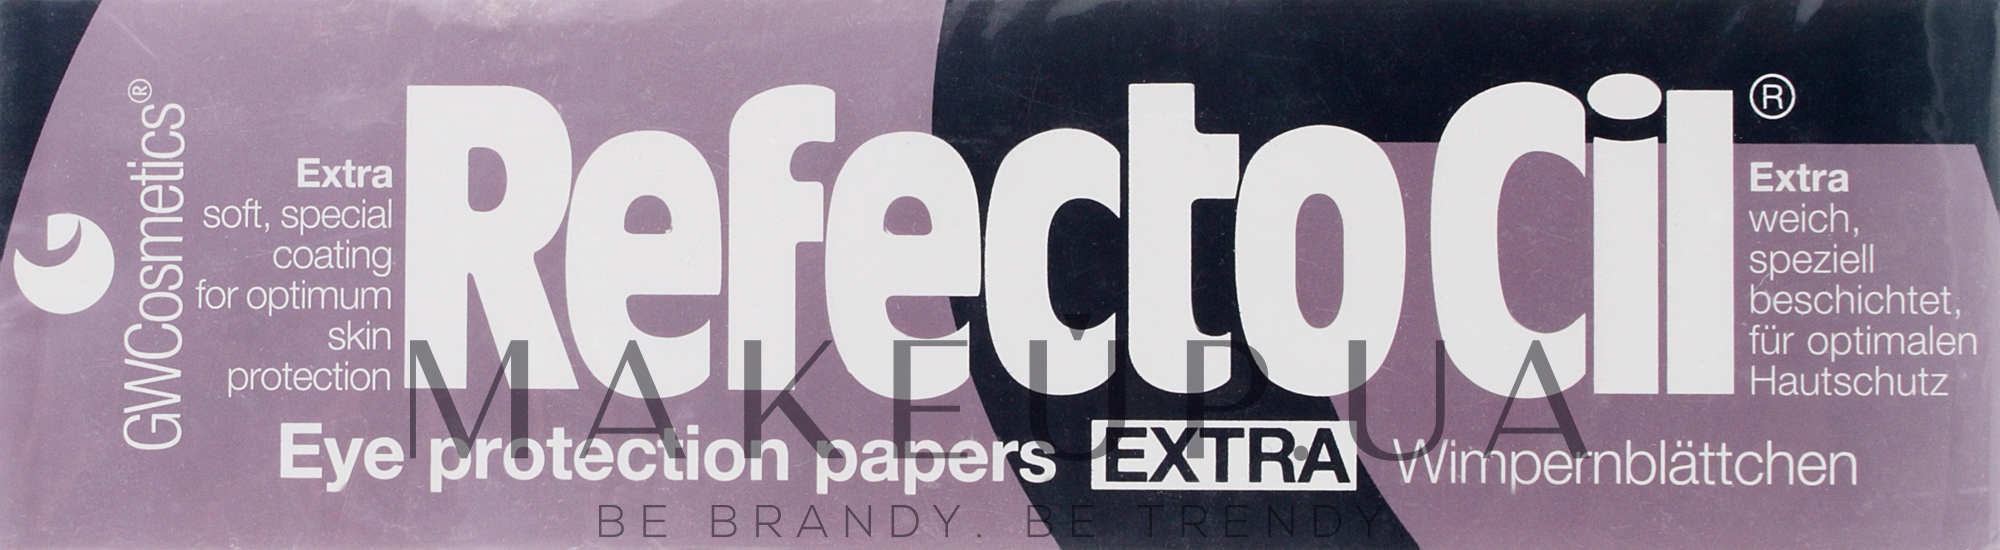 Паперові пелюстки під вії (80шт) - RefectoCil Eye Protection Papers Extra — фото 80шт